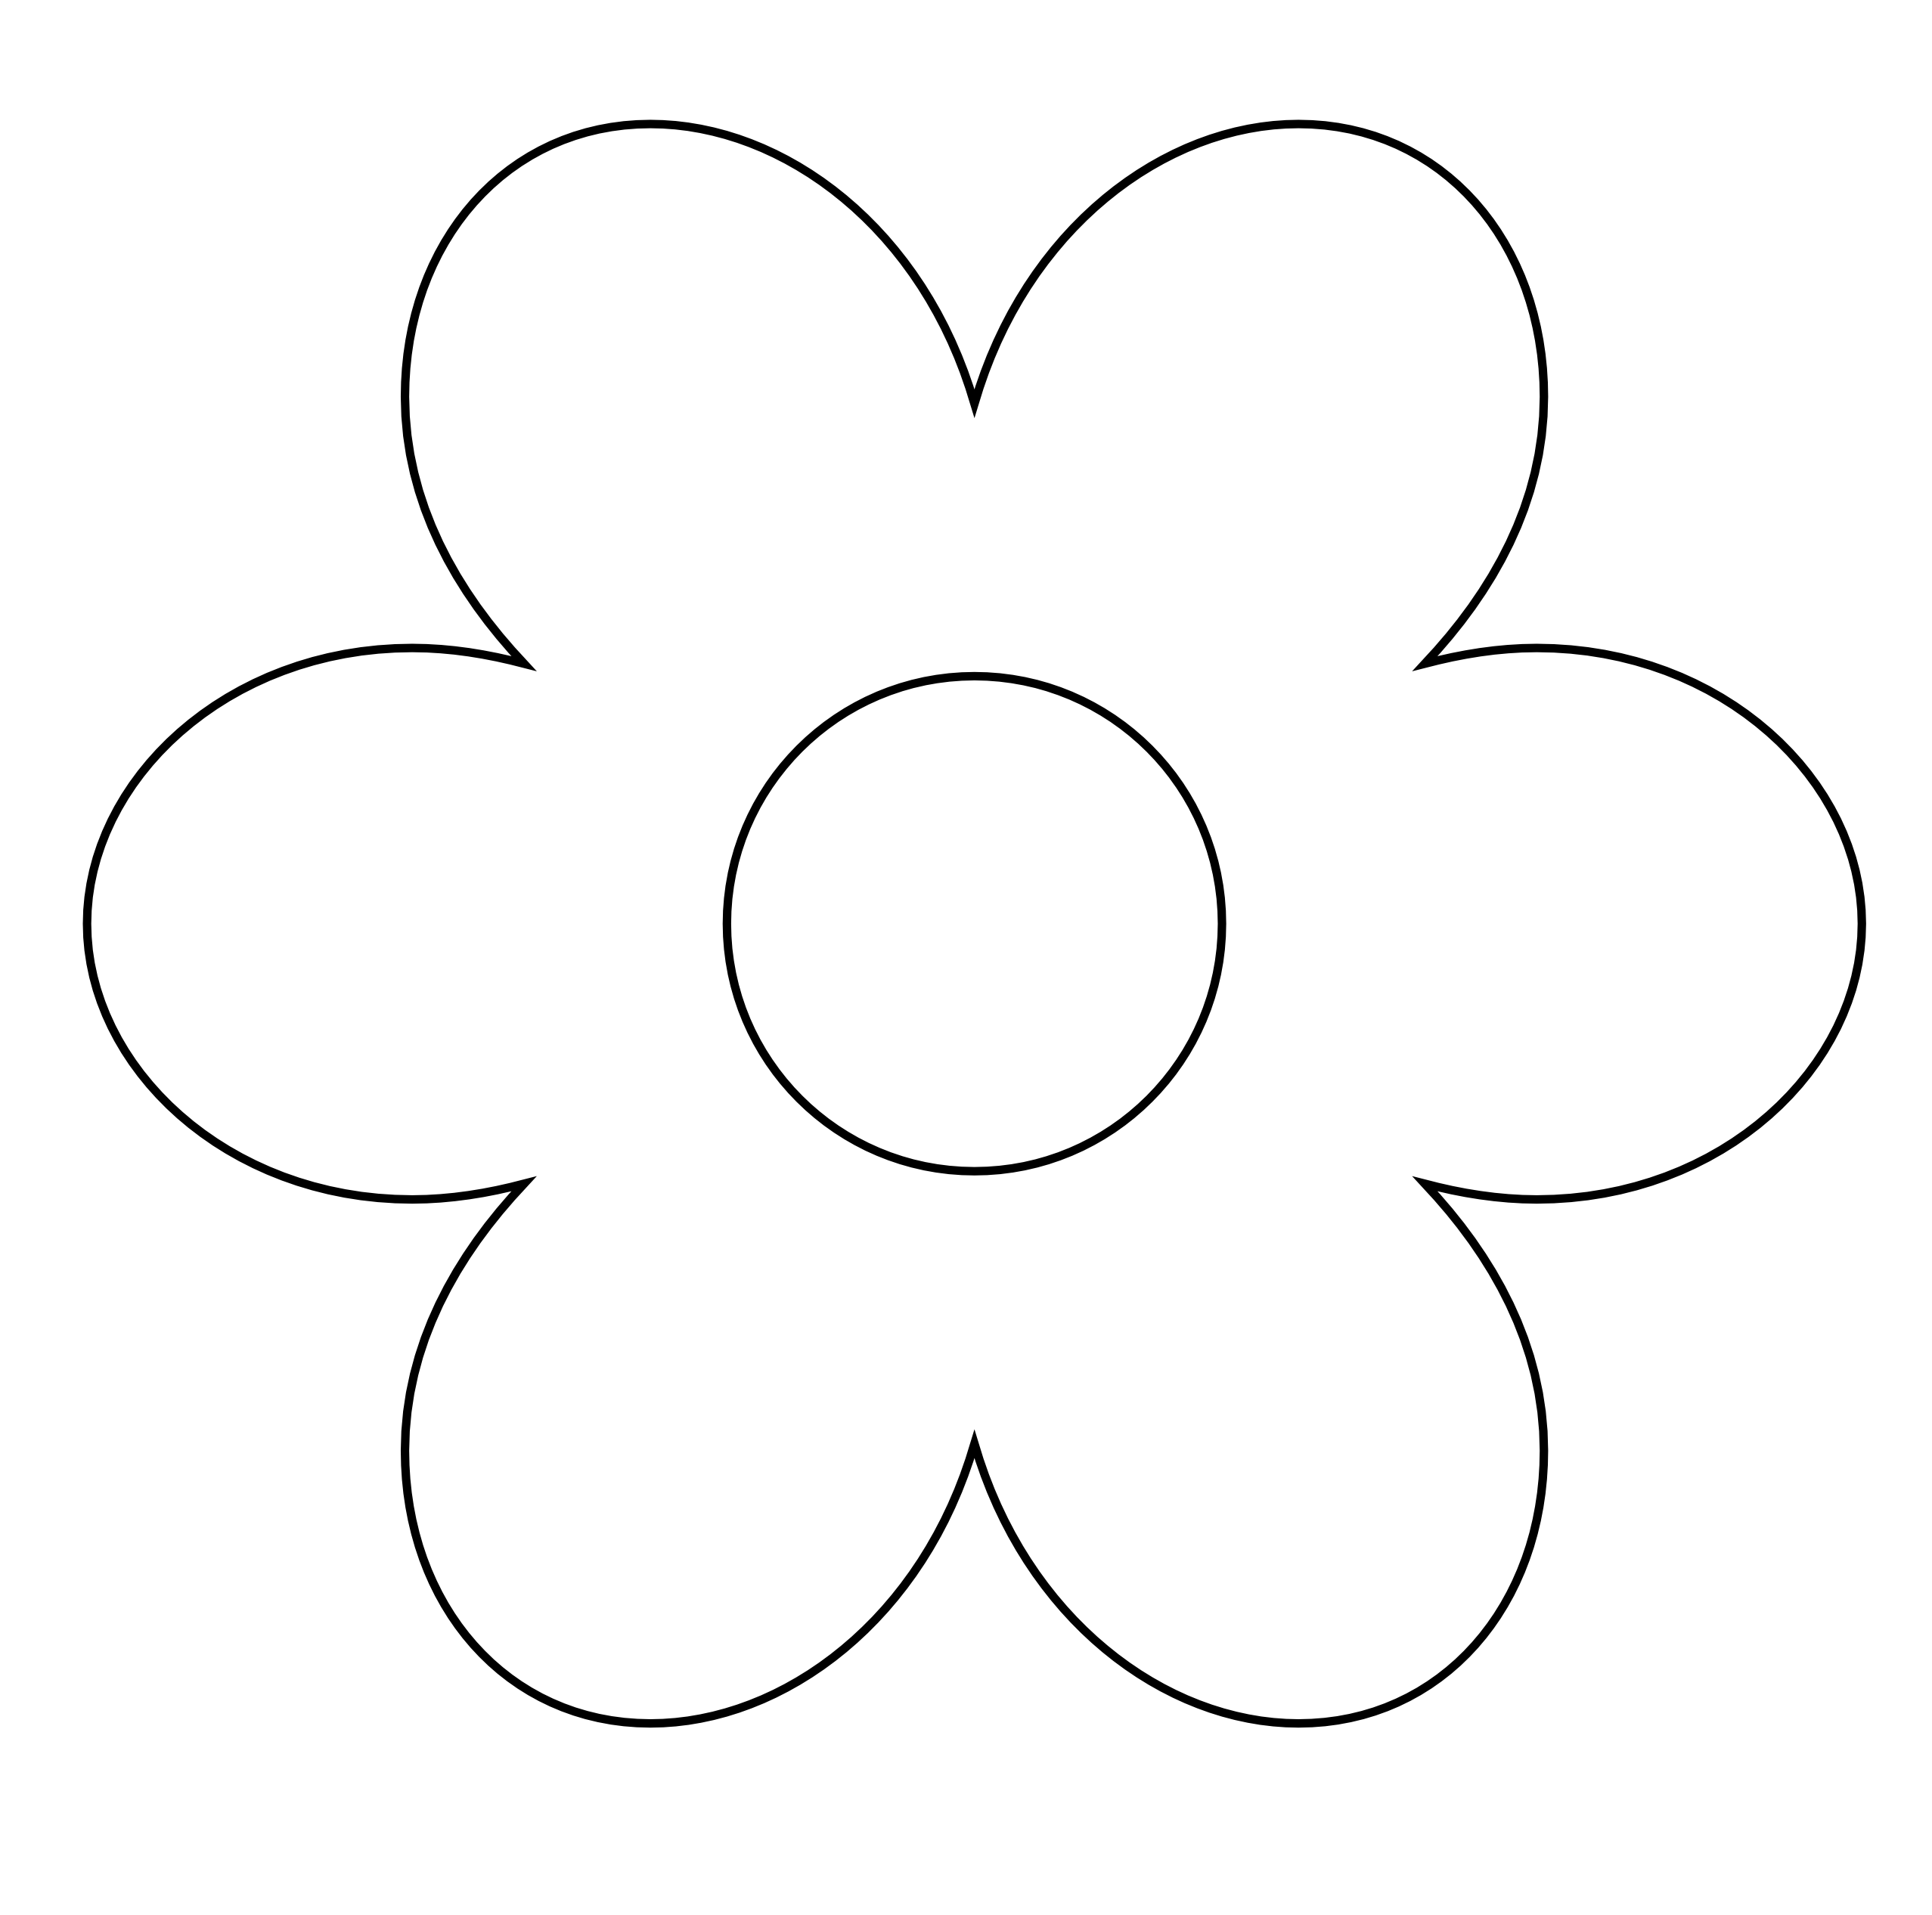 Flower black and white flower clipart black and white 8